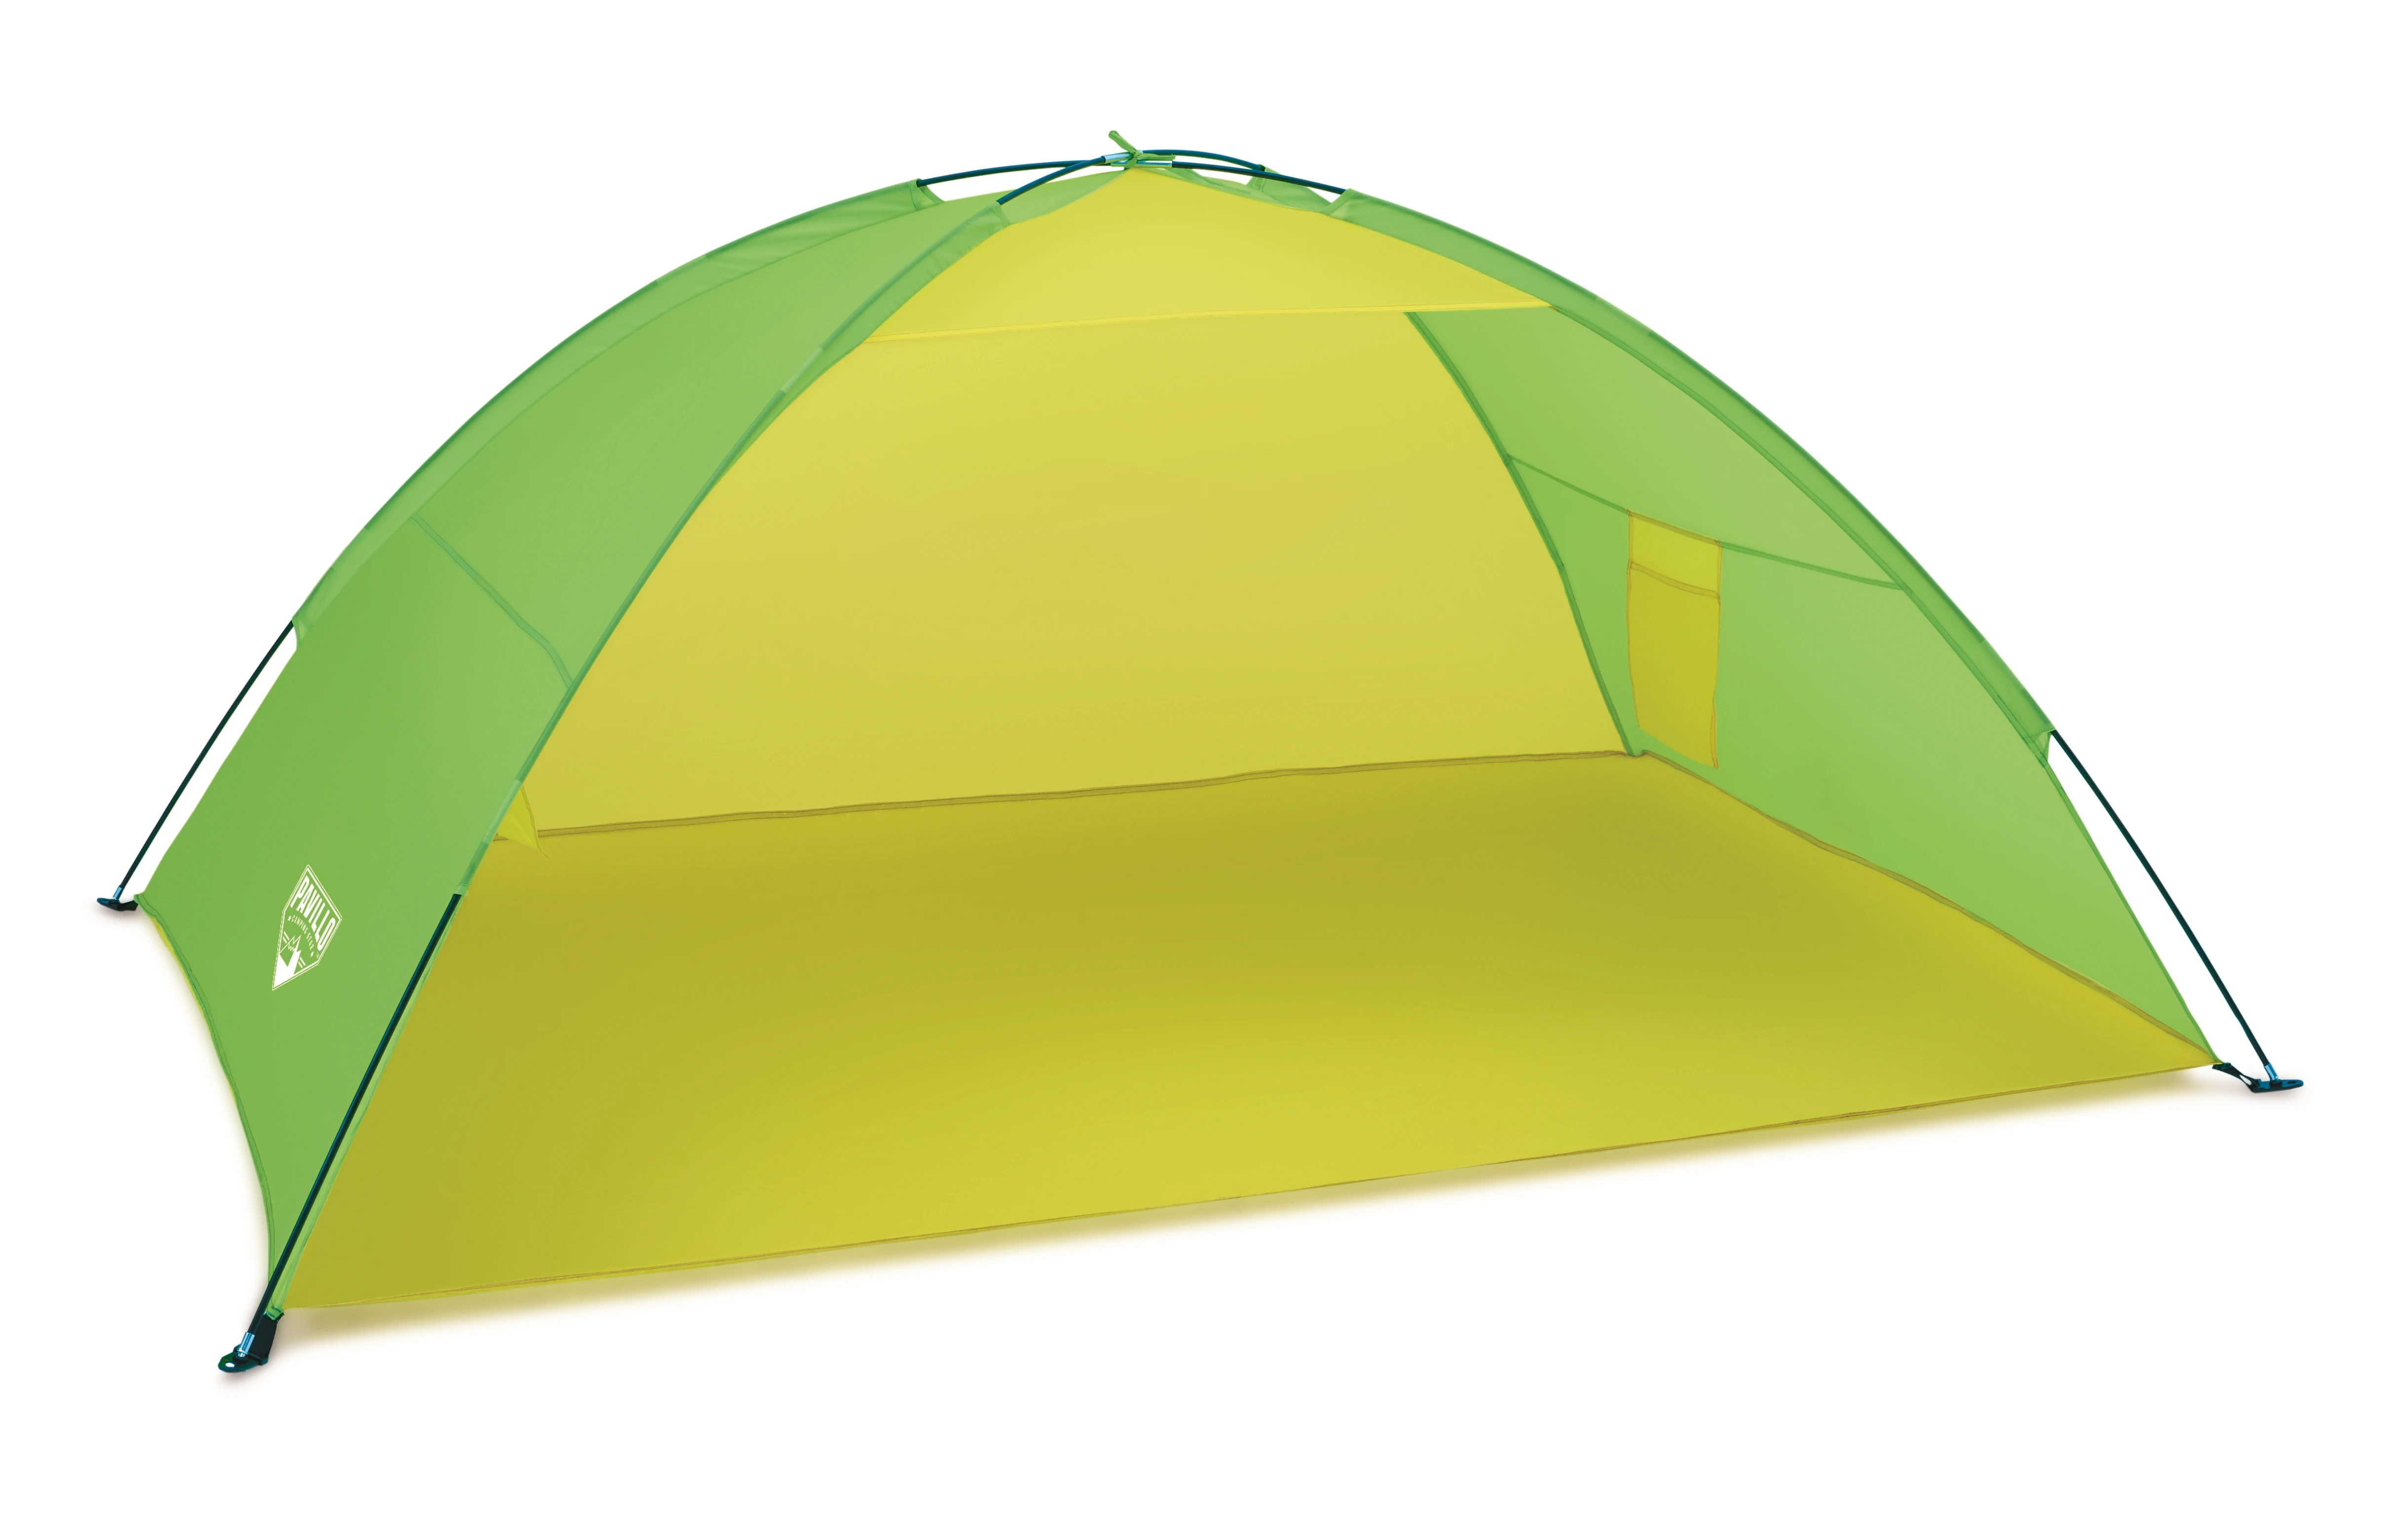 Igloo Tent Windbreaker Beach Camping Green 200x130 Bag Sun - AliExpress